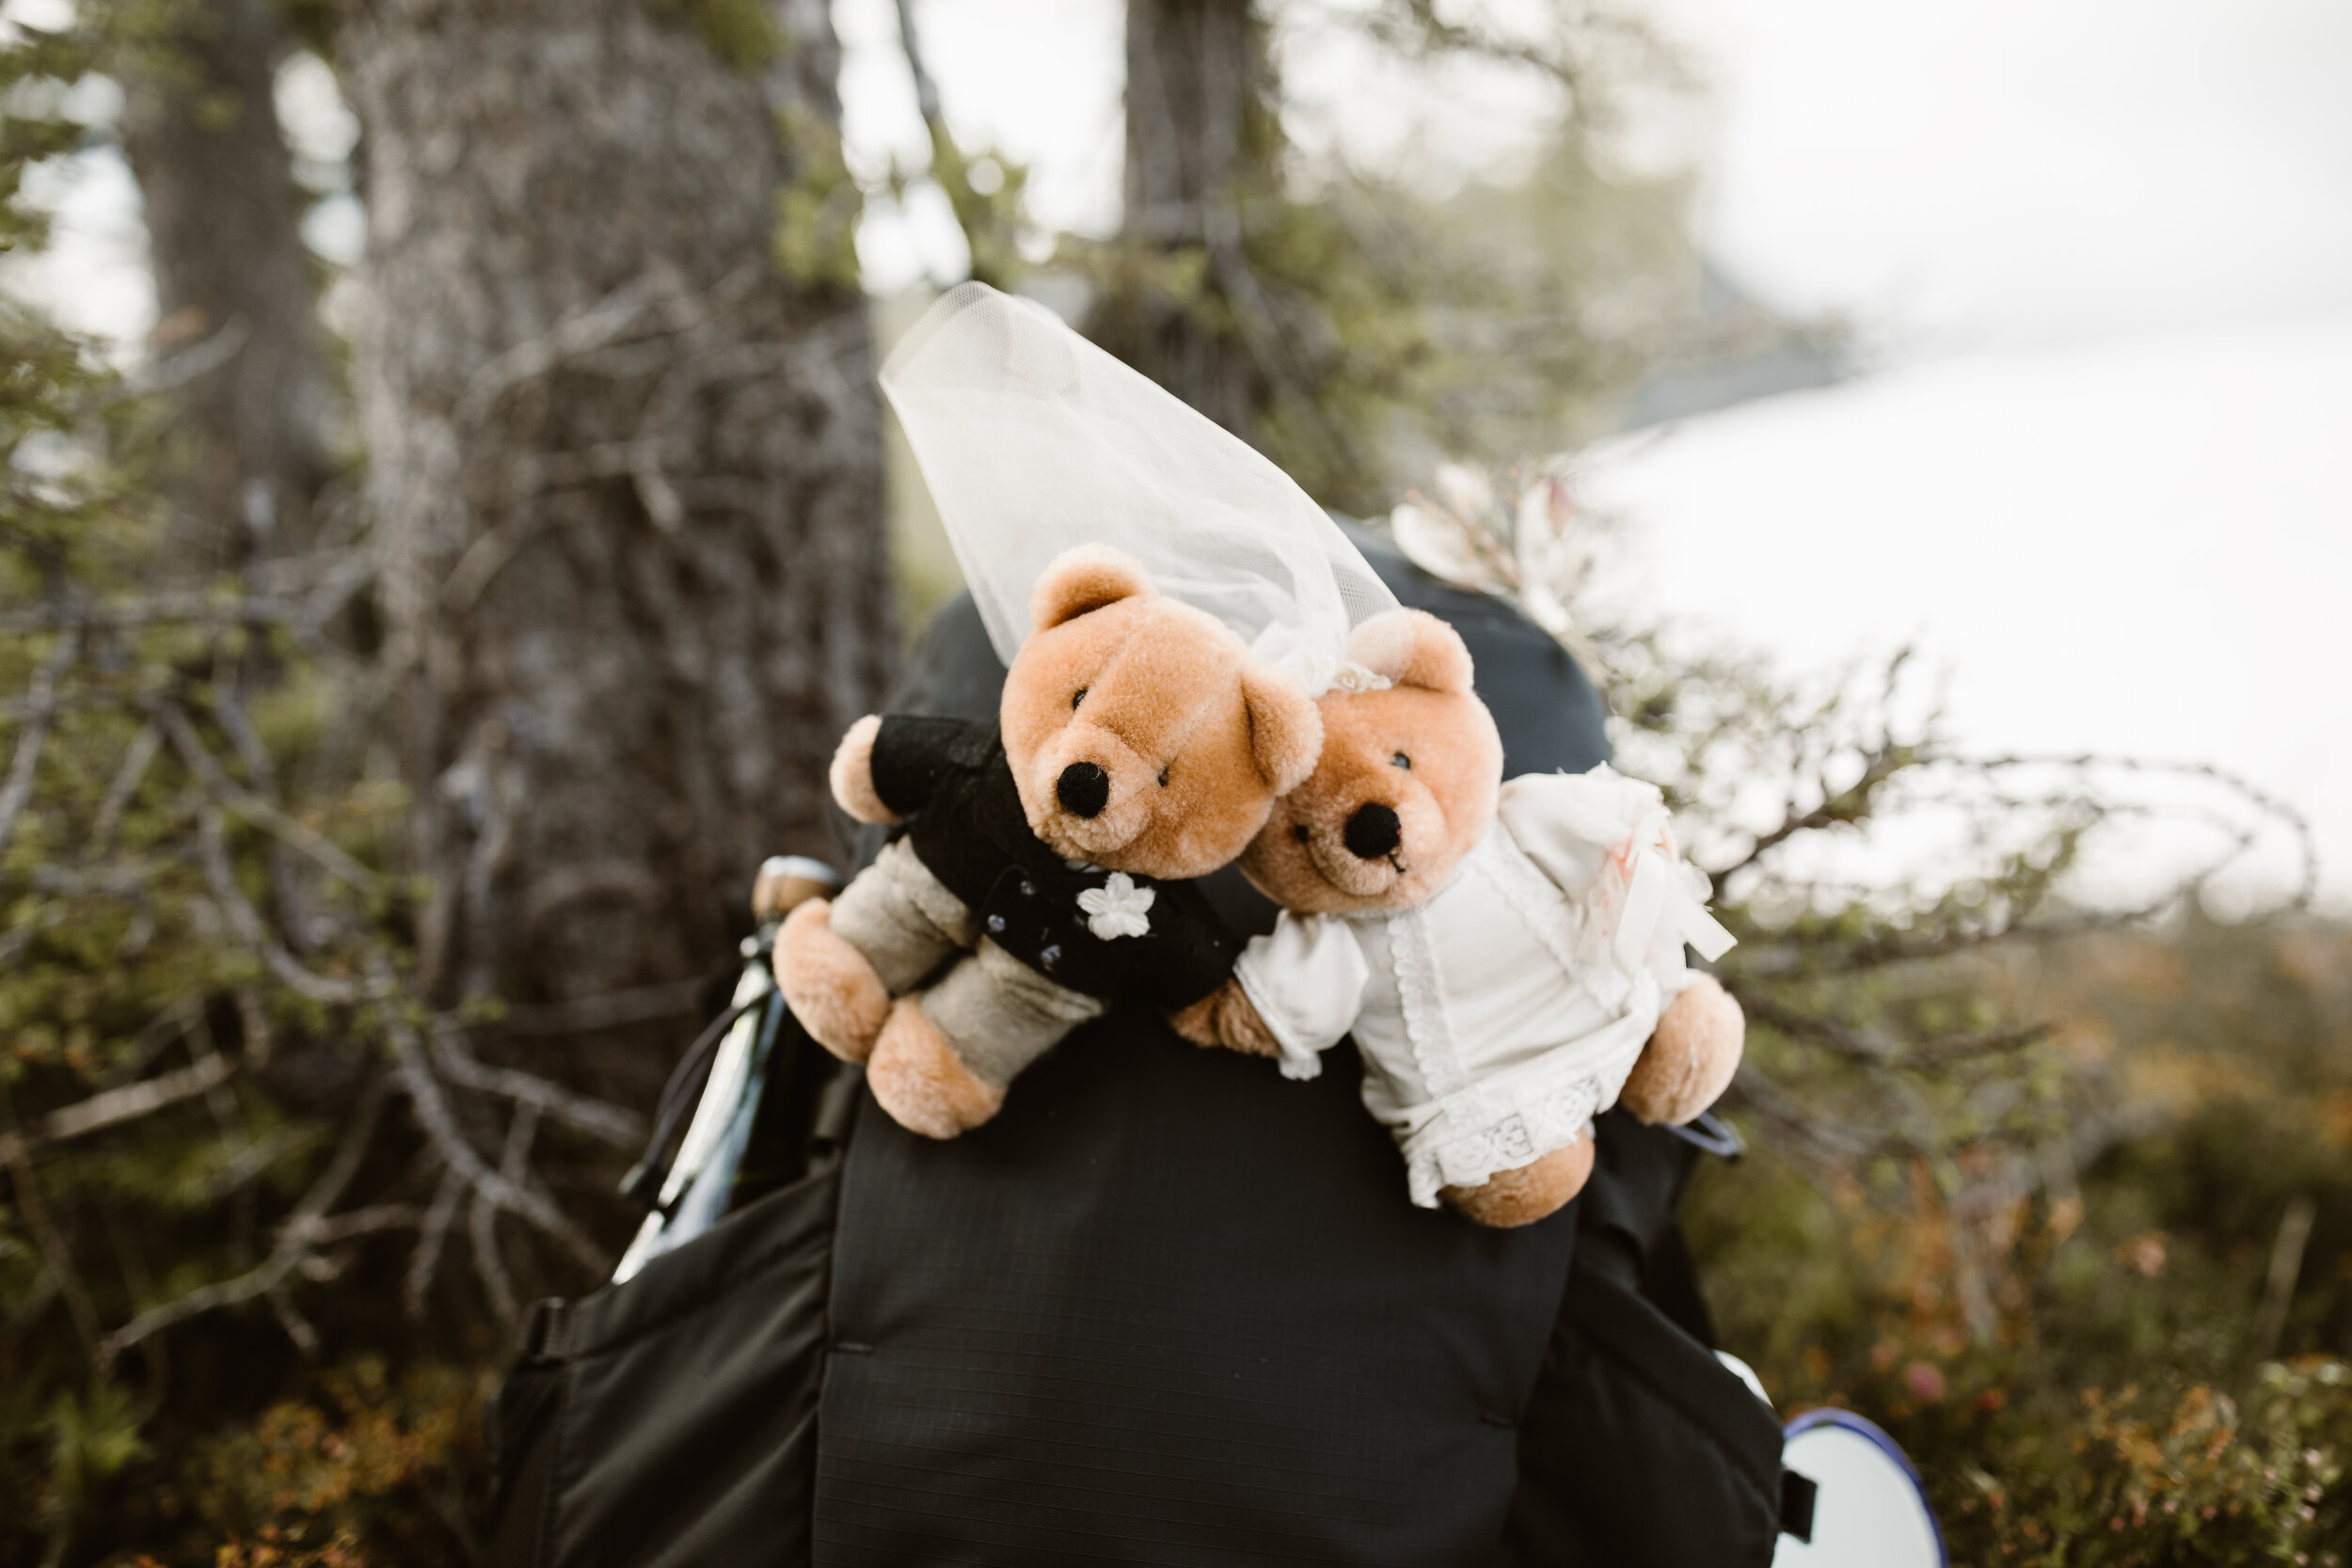 Nicole-Daacke-Photography-wedding-bears-tradition.jpg